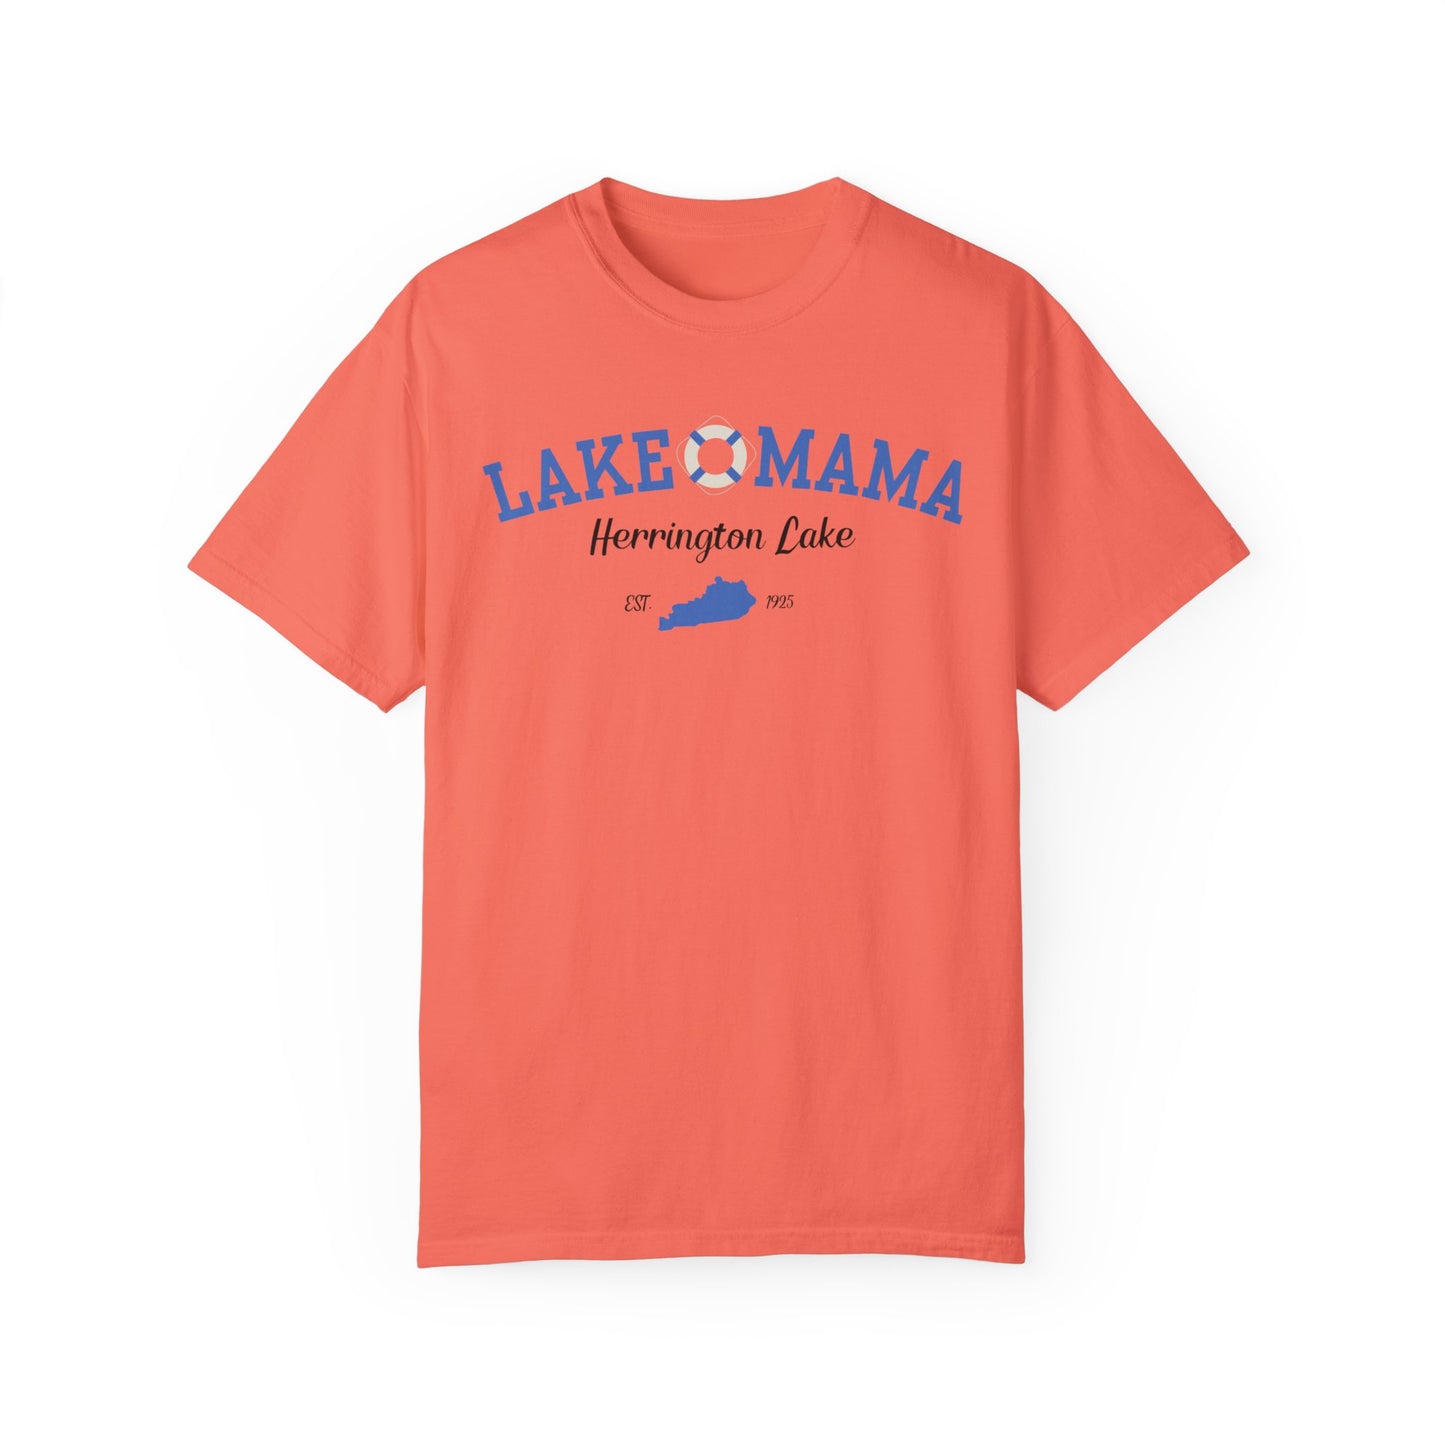 "Lake Mama" Premium Garment-Dyed Comfort Colors TShirt